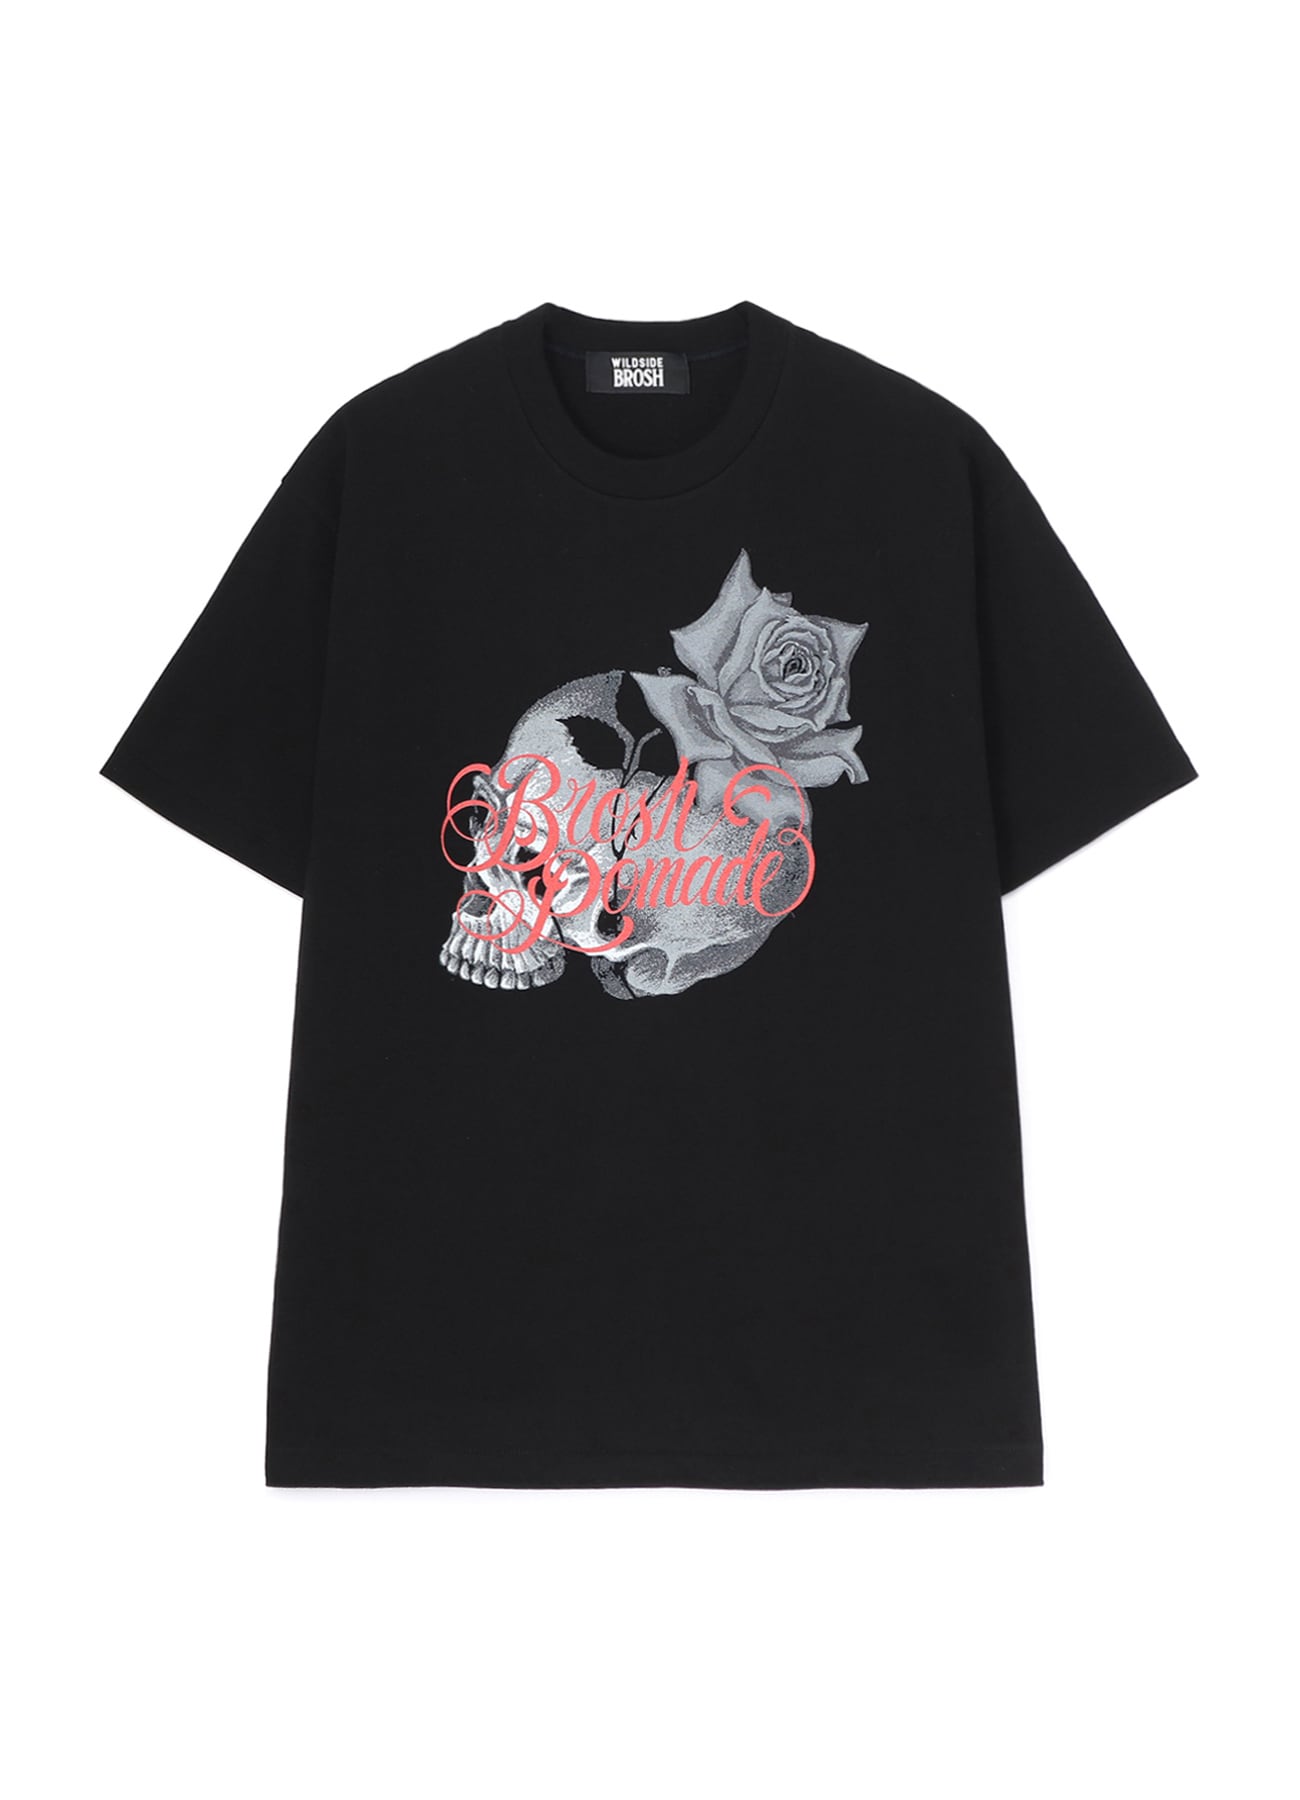 【5/25 12:00 release】WILDSIDE × BROSH T-shirt (SCULLROSE)